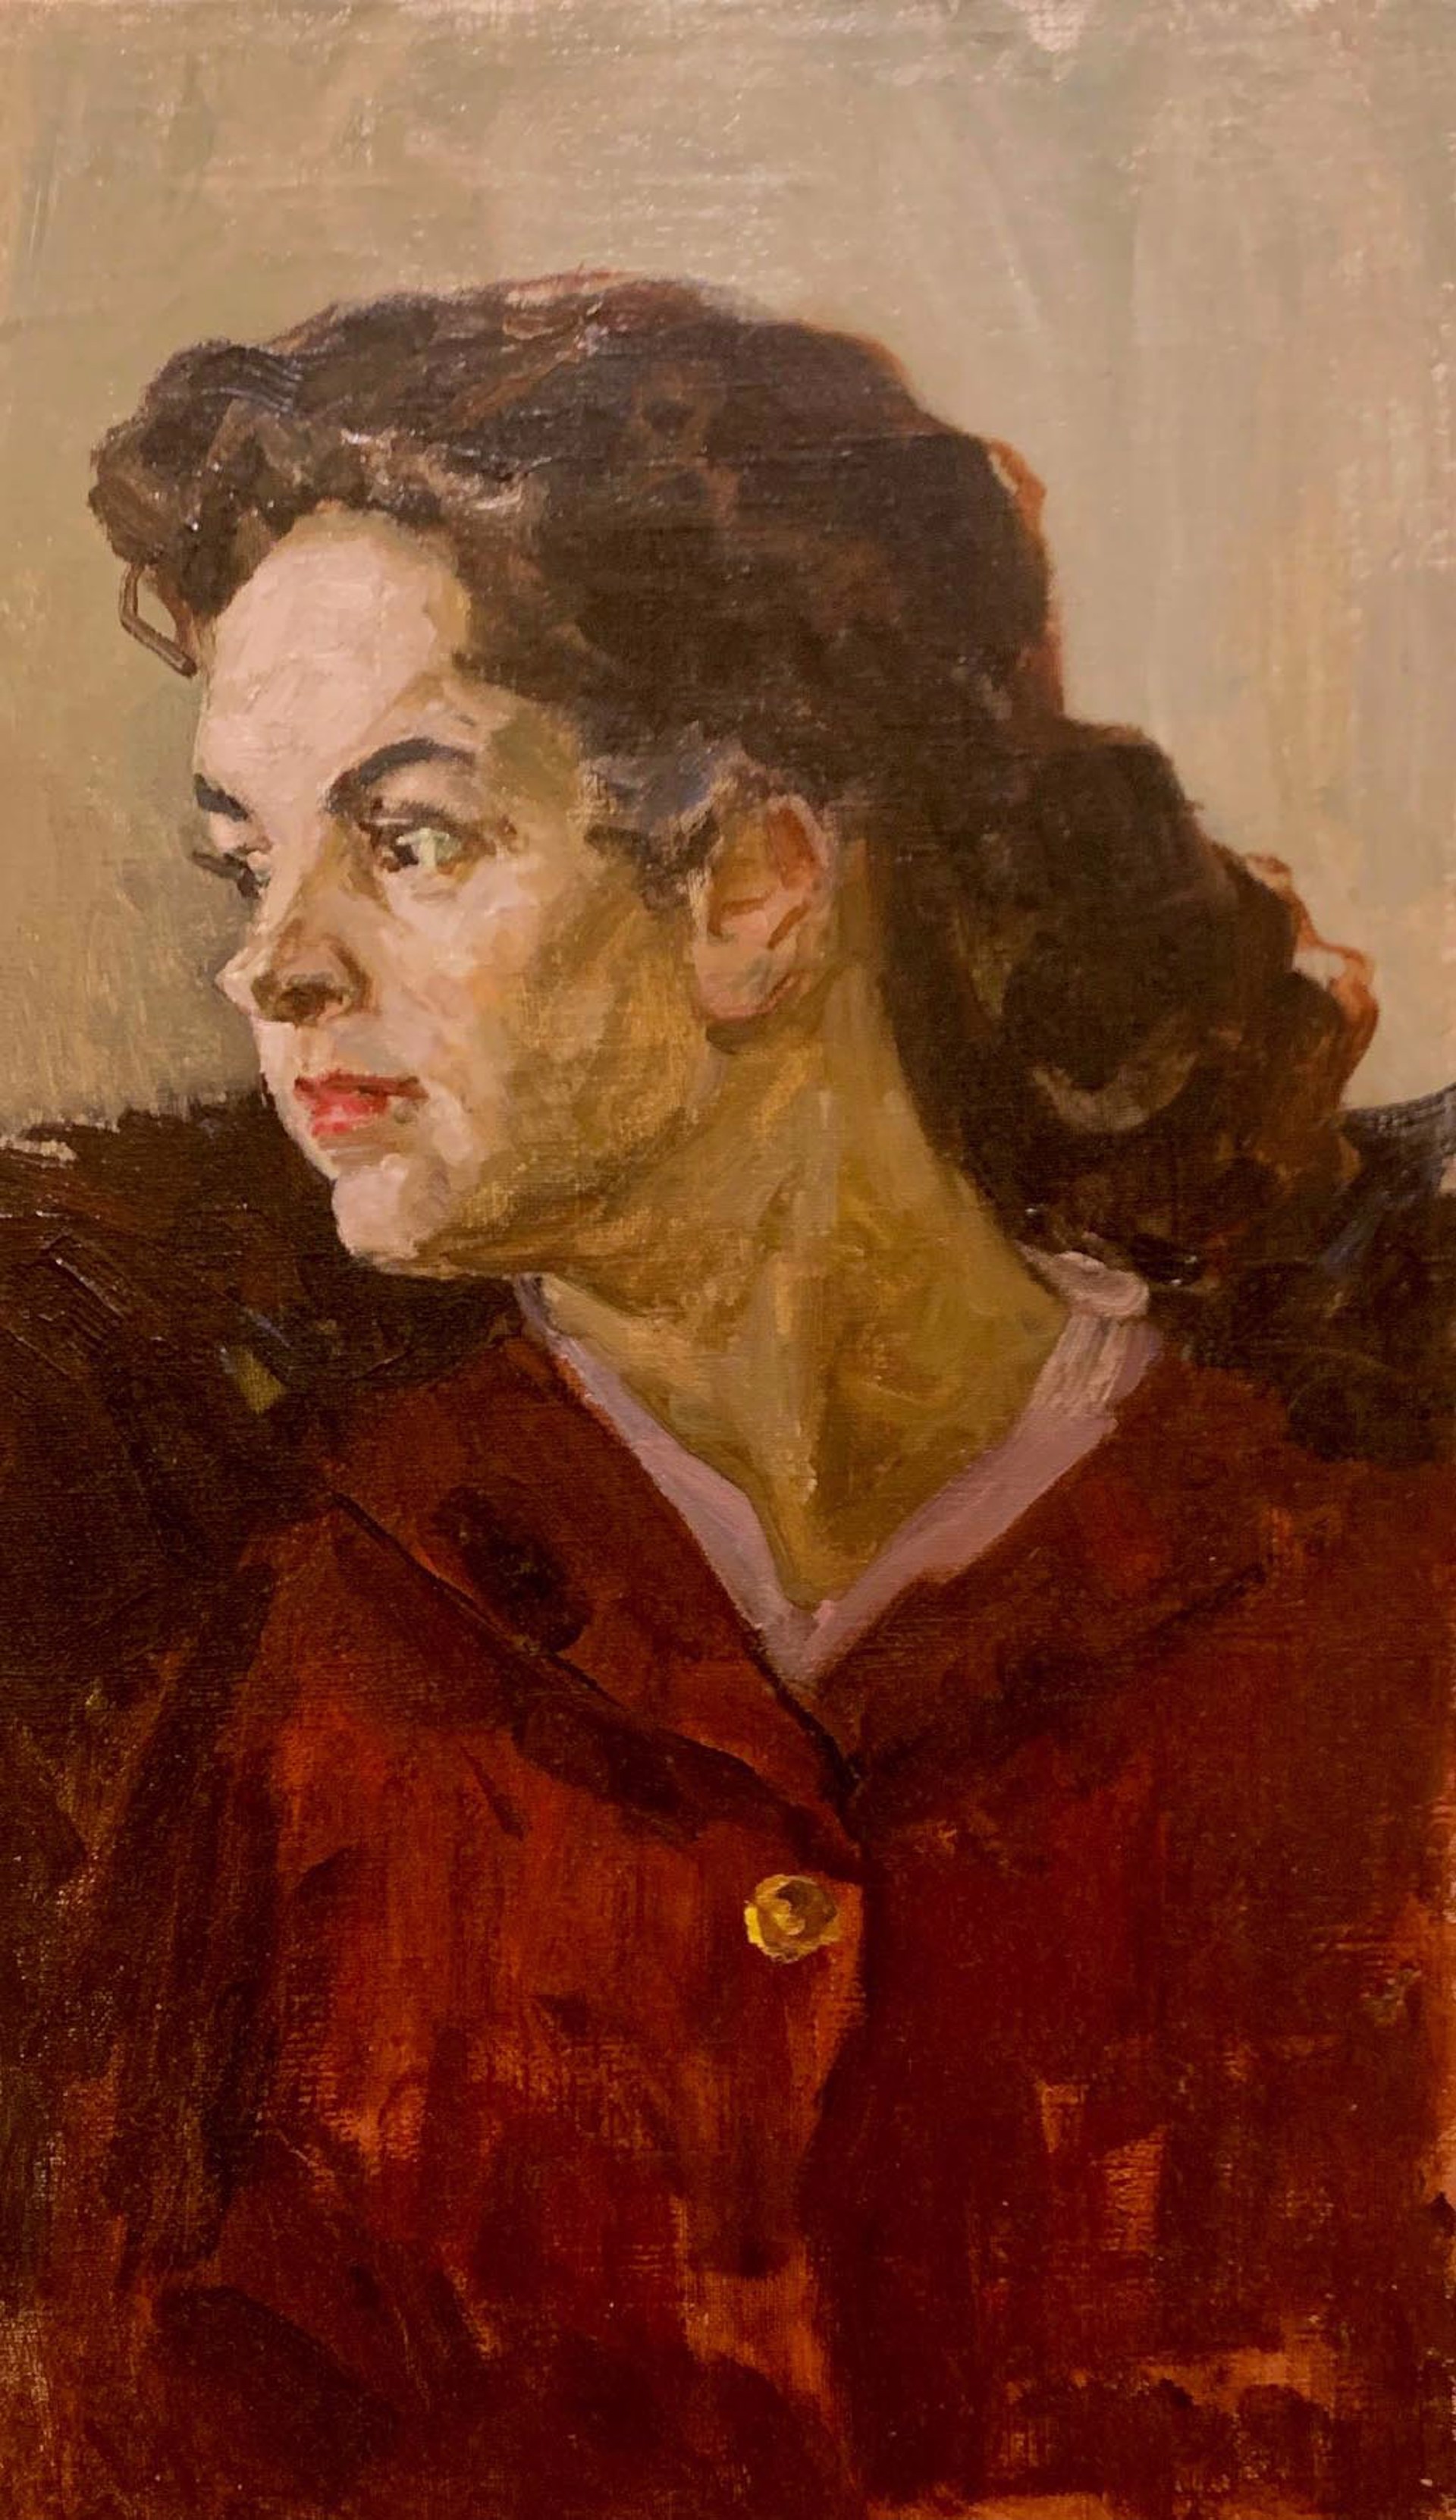 Woman in Red by Nikolai Esalov